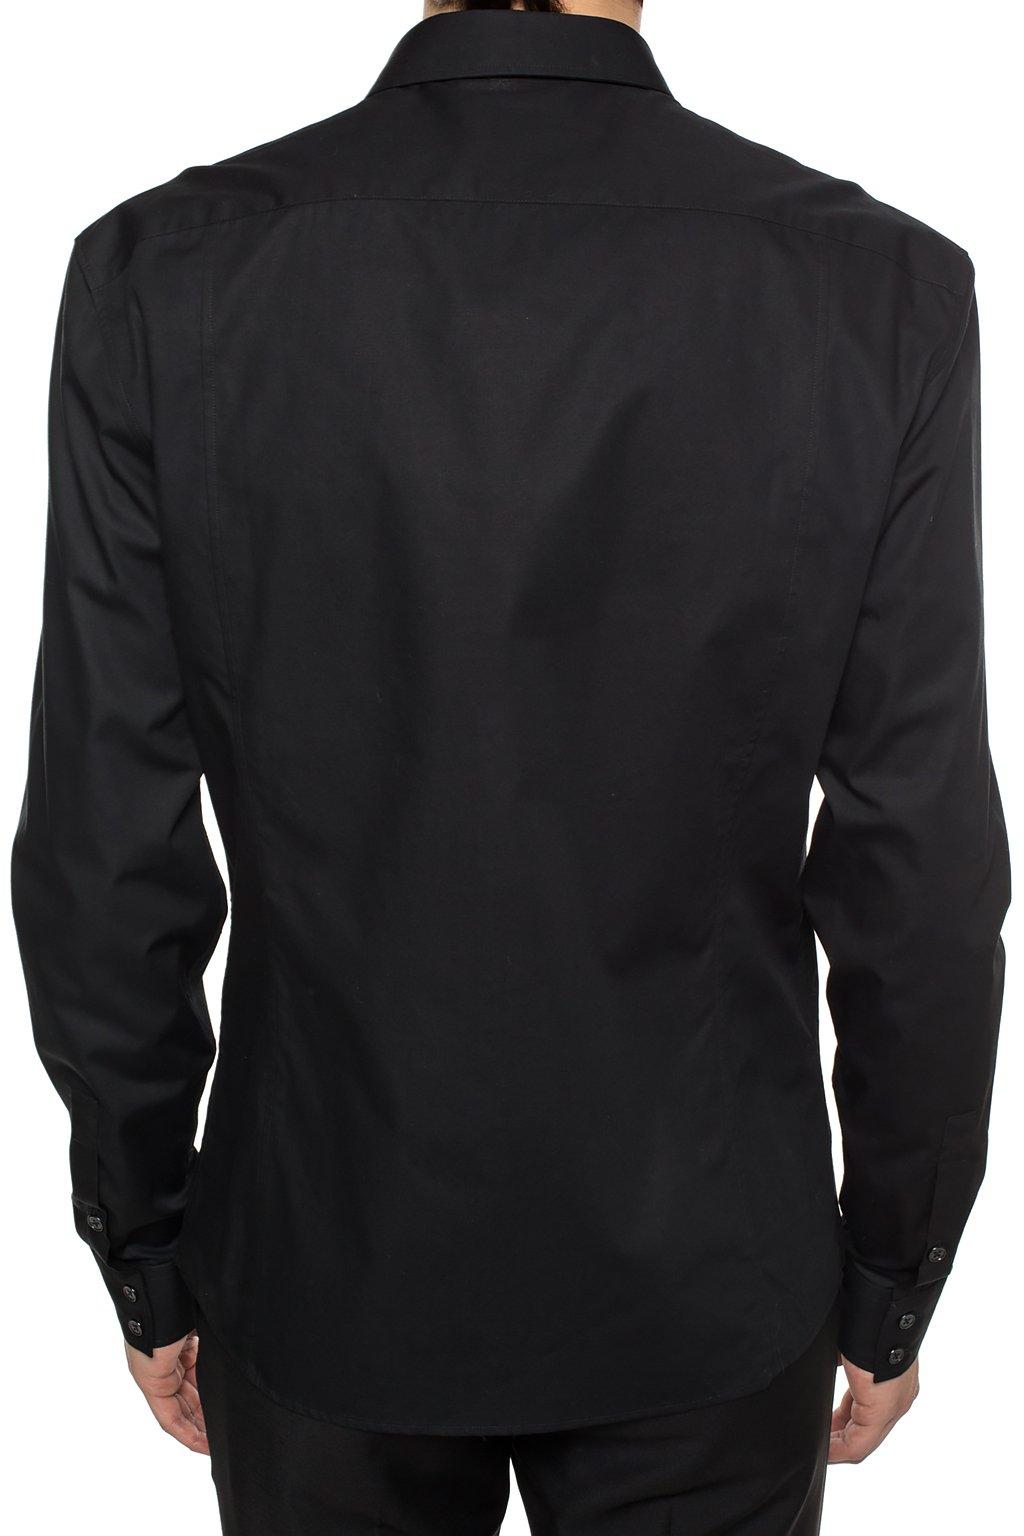 Balmain Cotton Embroidered Shirt in White Black (Black) for Men - Lyst